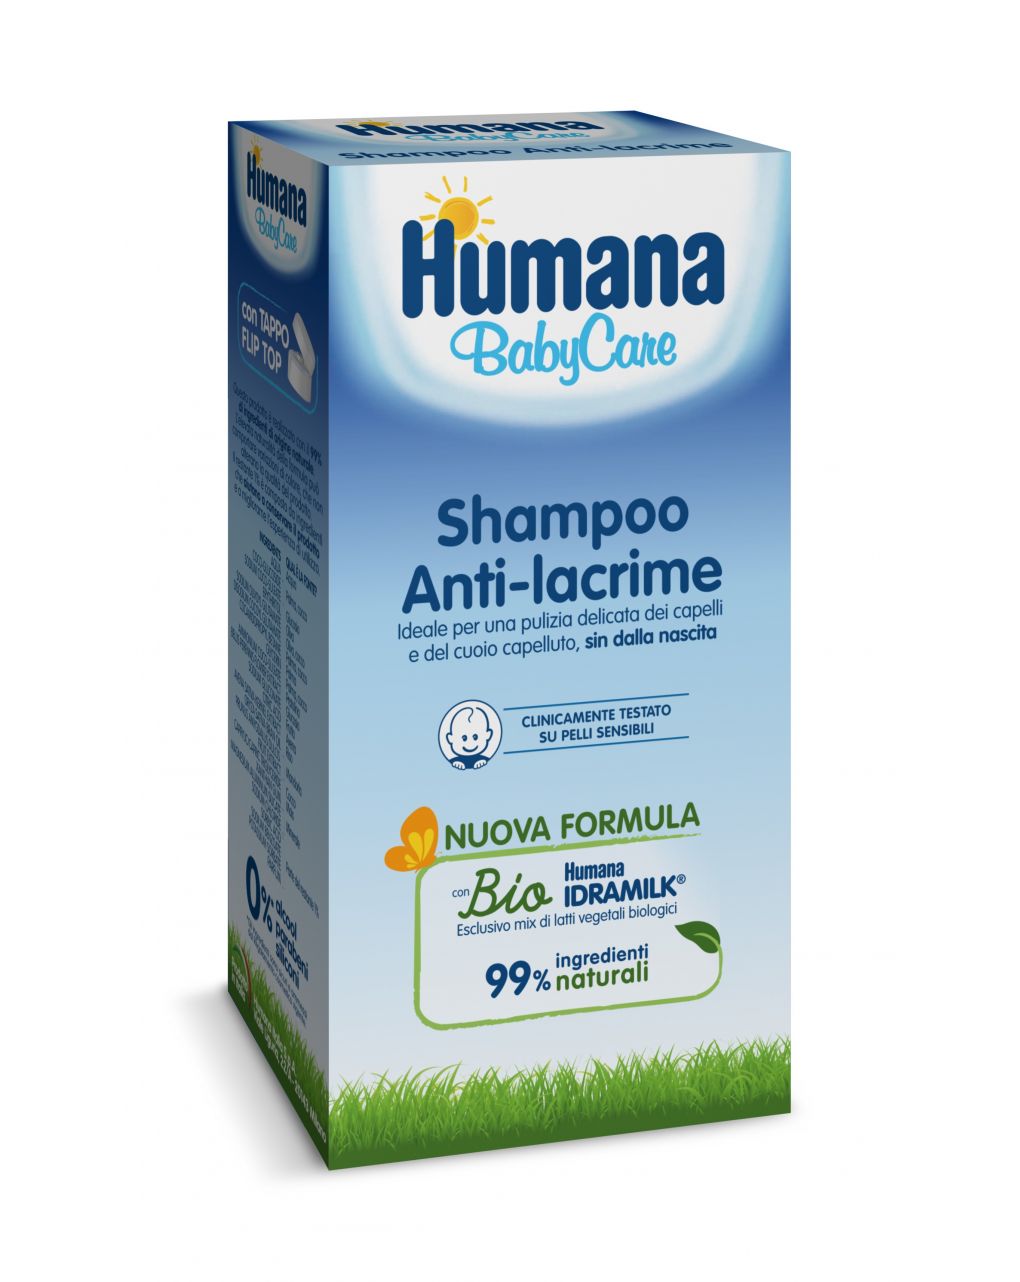 Shampoo anti-lacrime 200 ml - Humana Baby